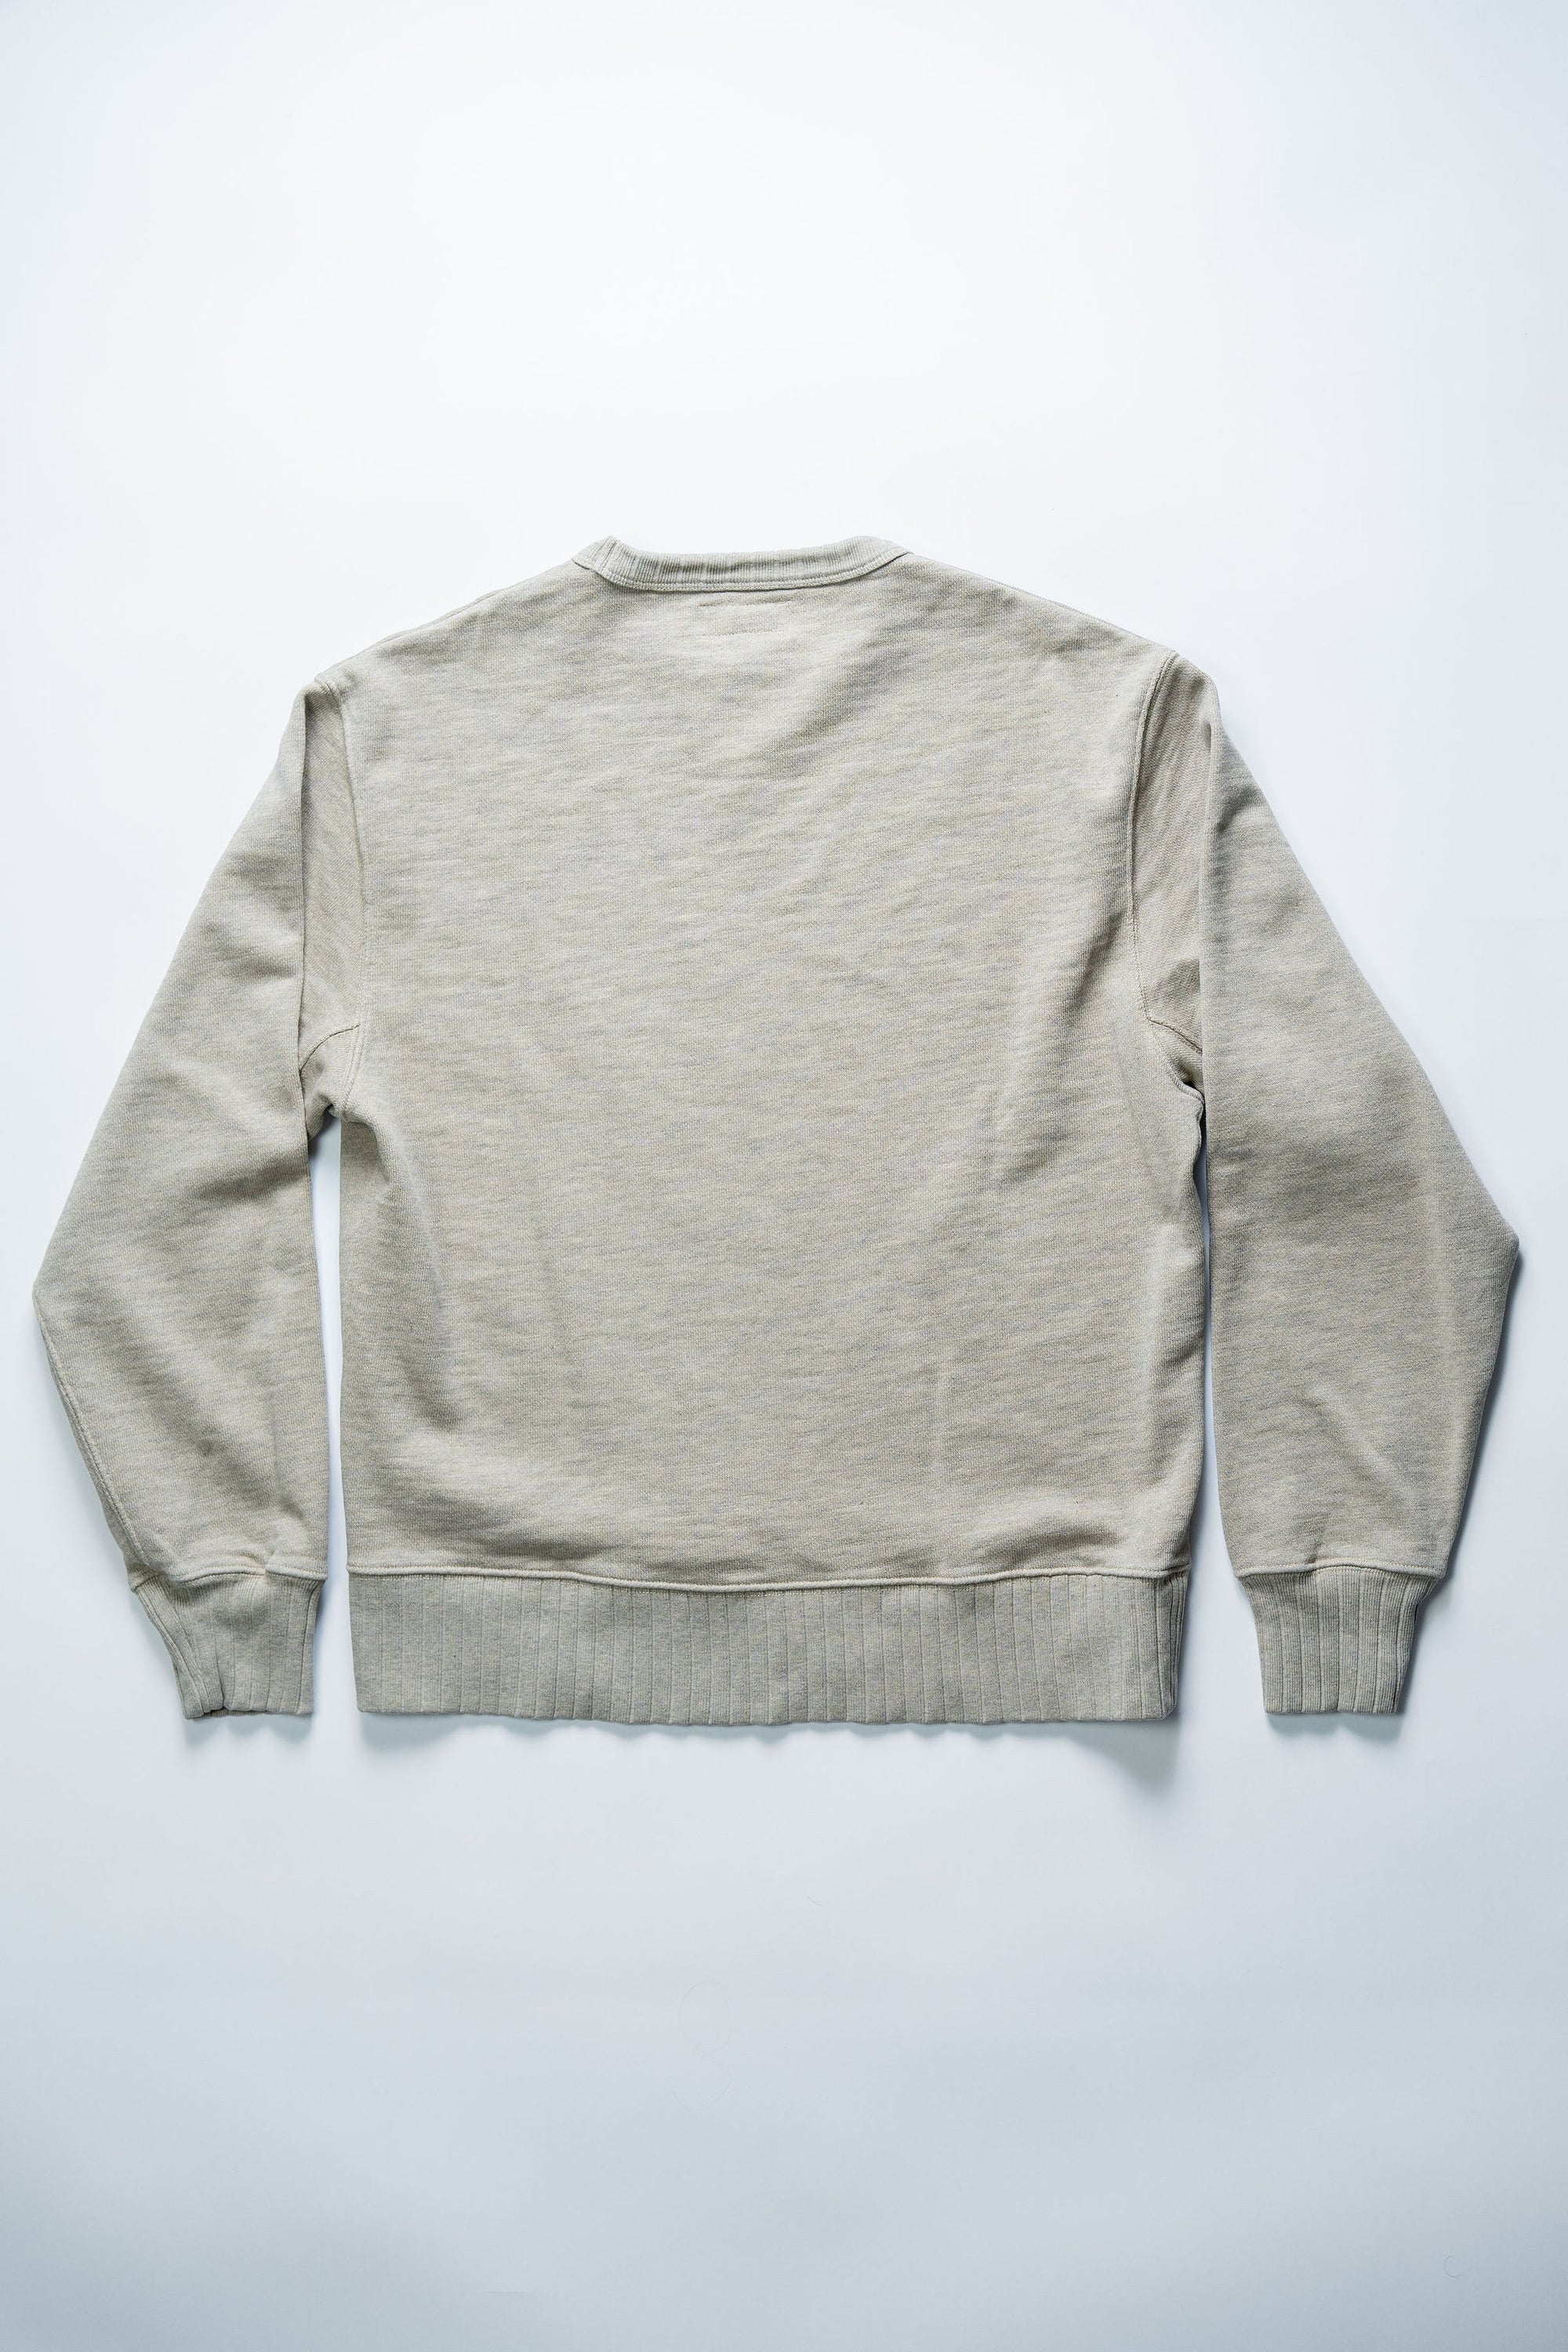 Merz b. Schwanen RFC01 Good Basics 19oz Relaxed Fit Sweatshirt - Vintage Grey Melange